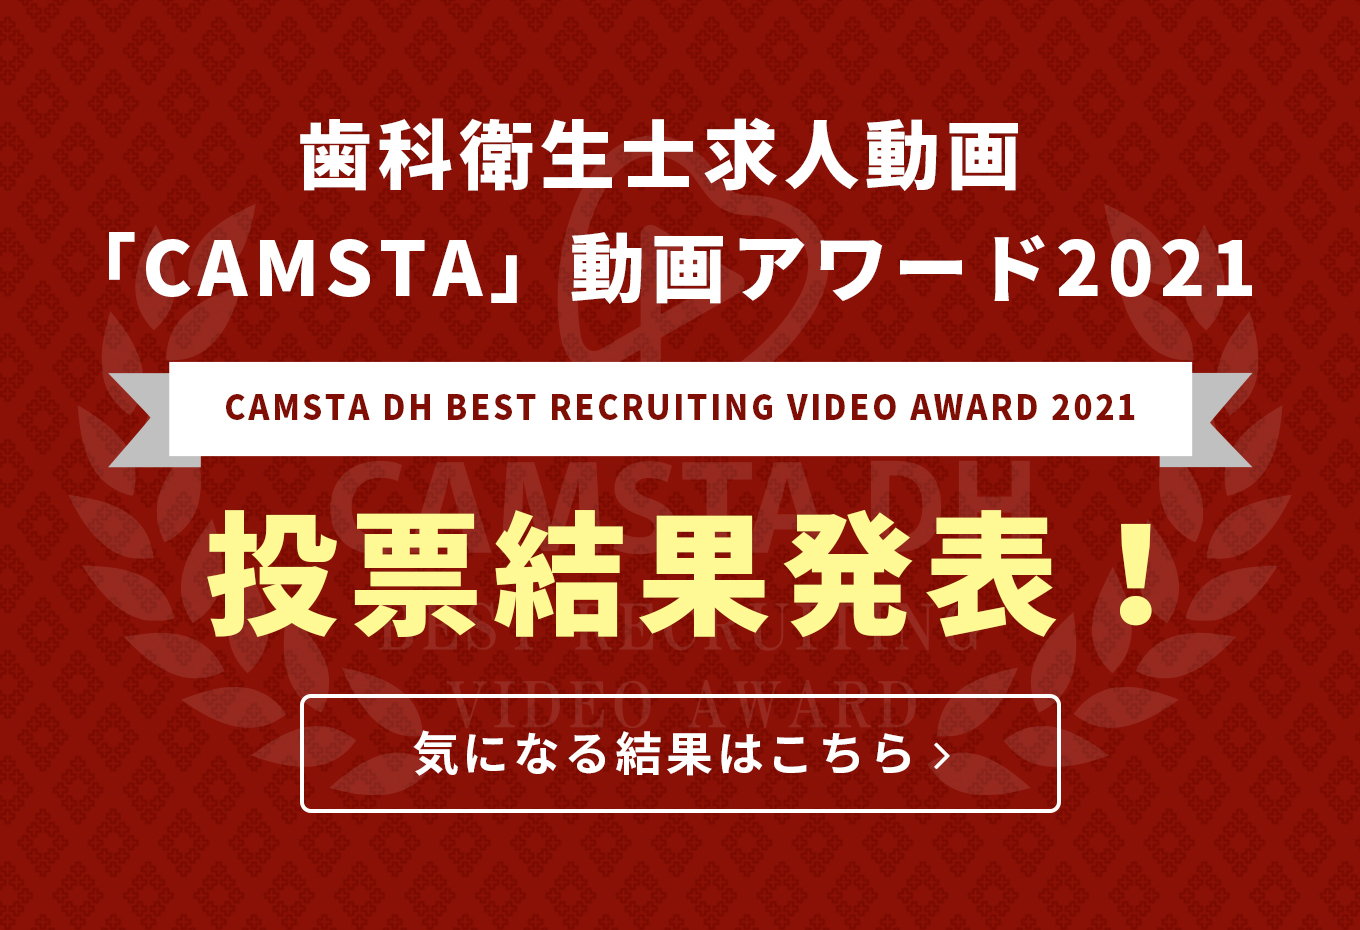 歯科衛生士求人動画「CAMSTA」動画アワード2021 結果発表